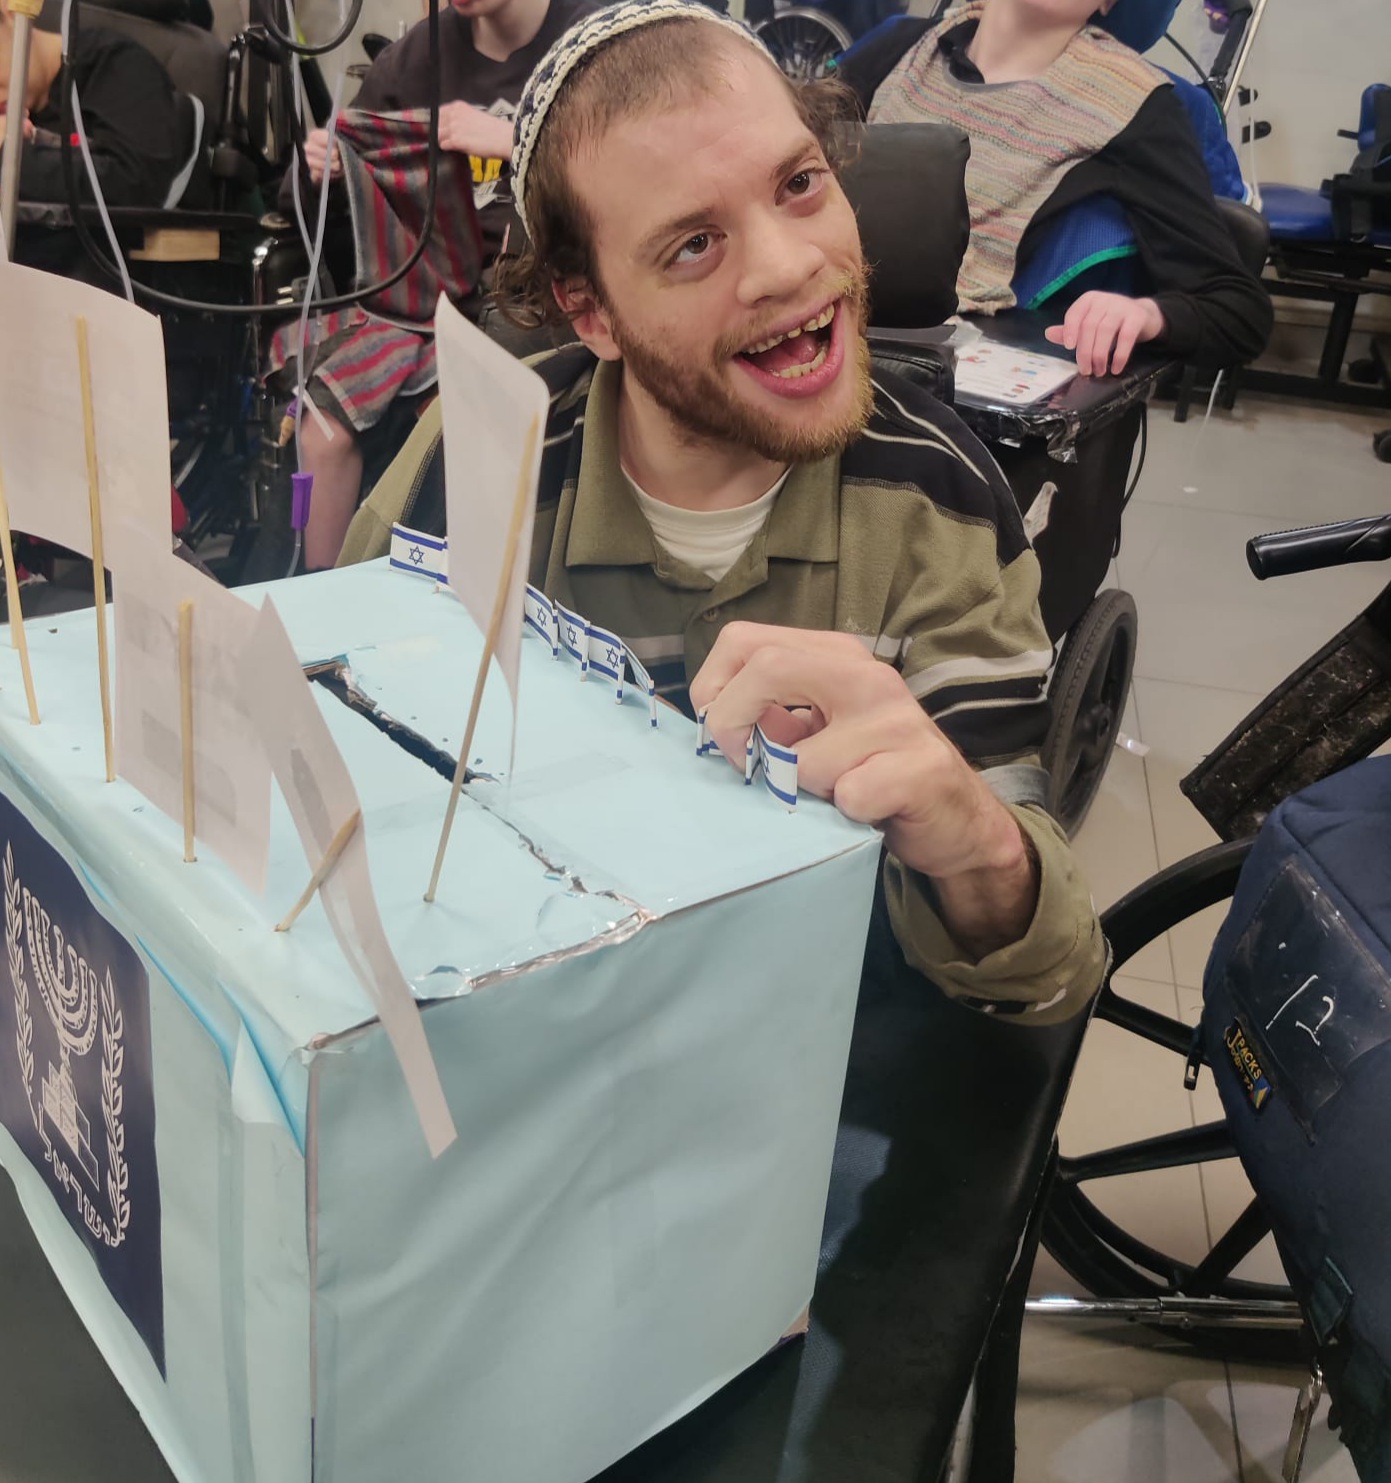 Boy with disabilities holding a voting box בחור עם מגבלויות מחזיק קלפי